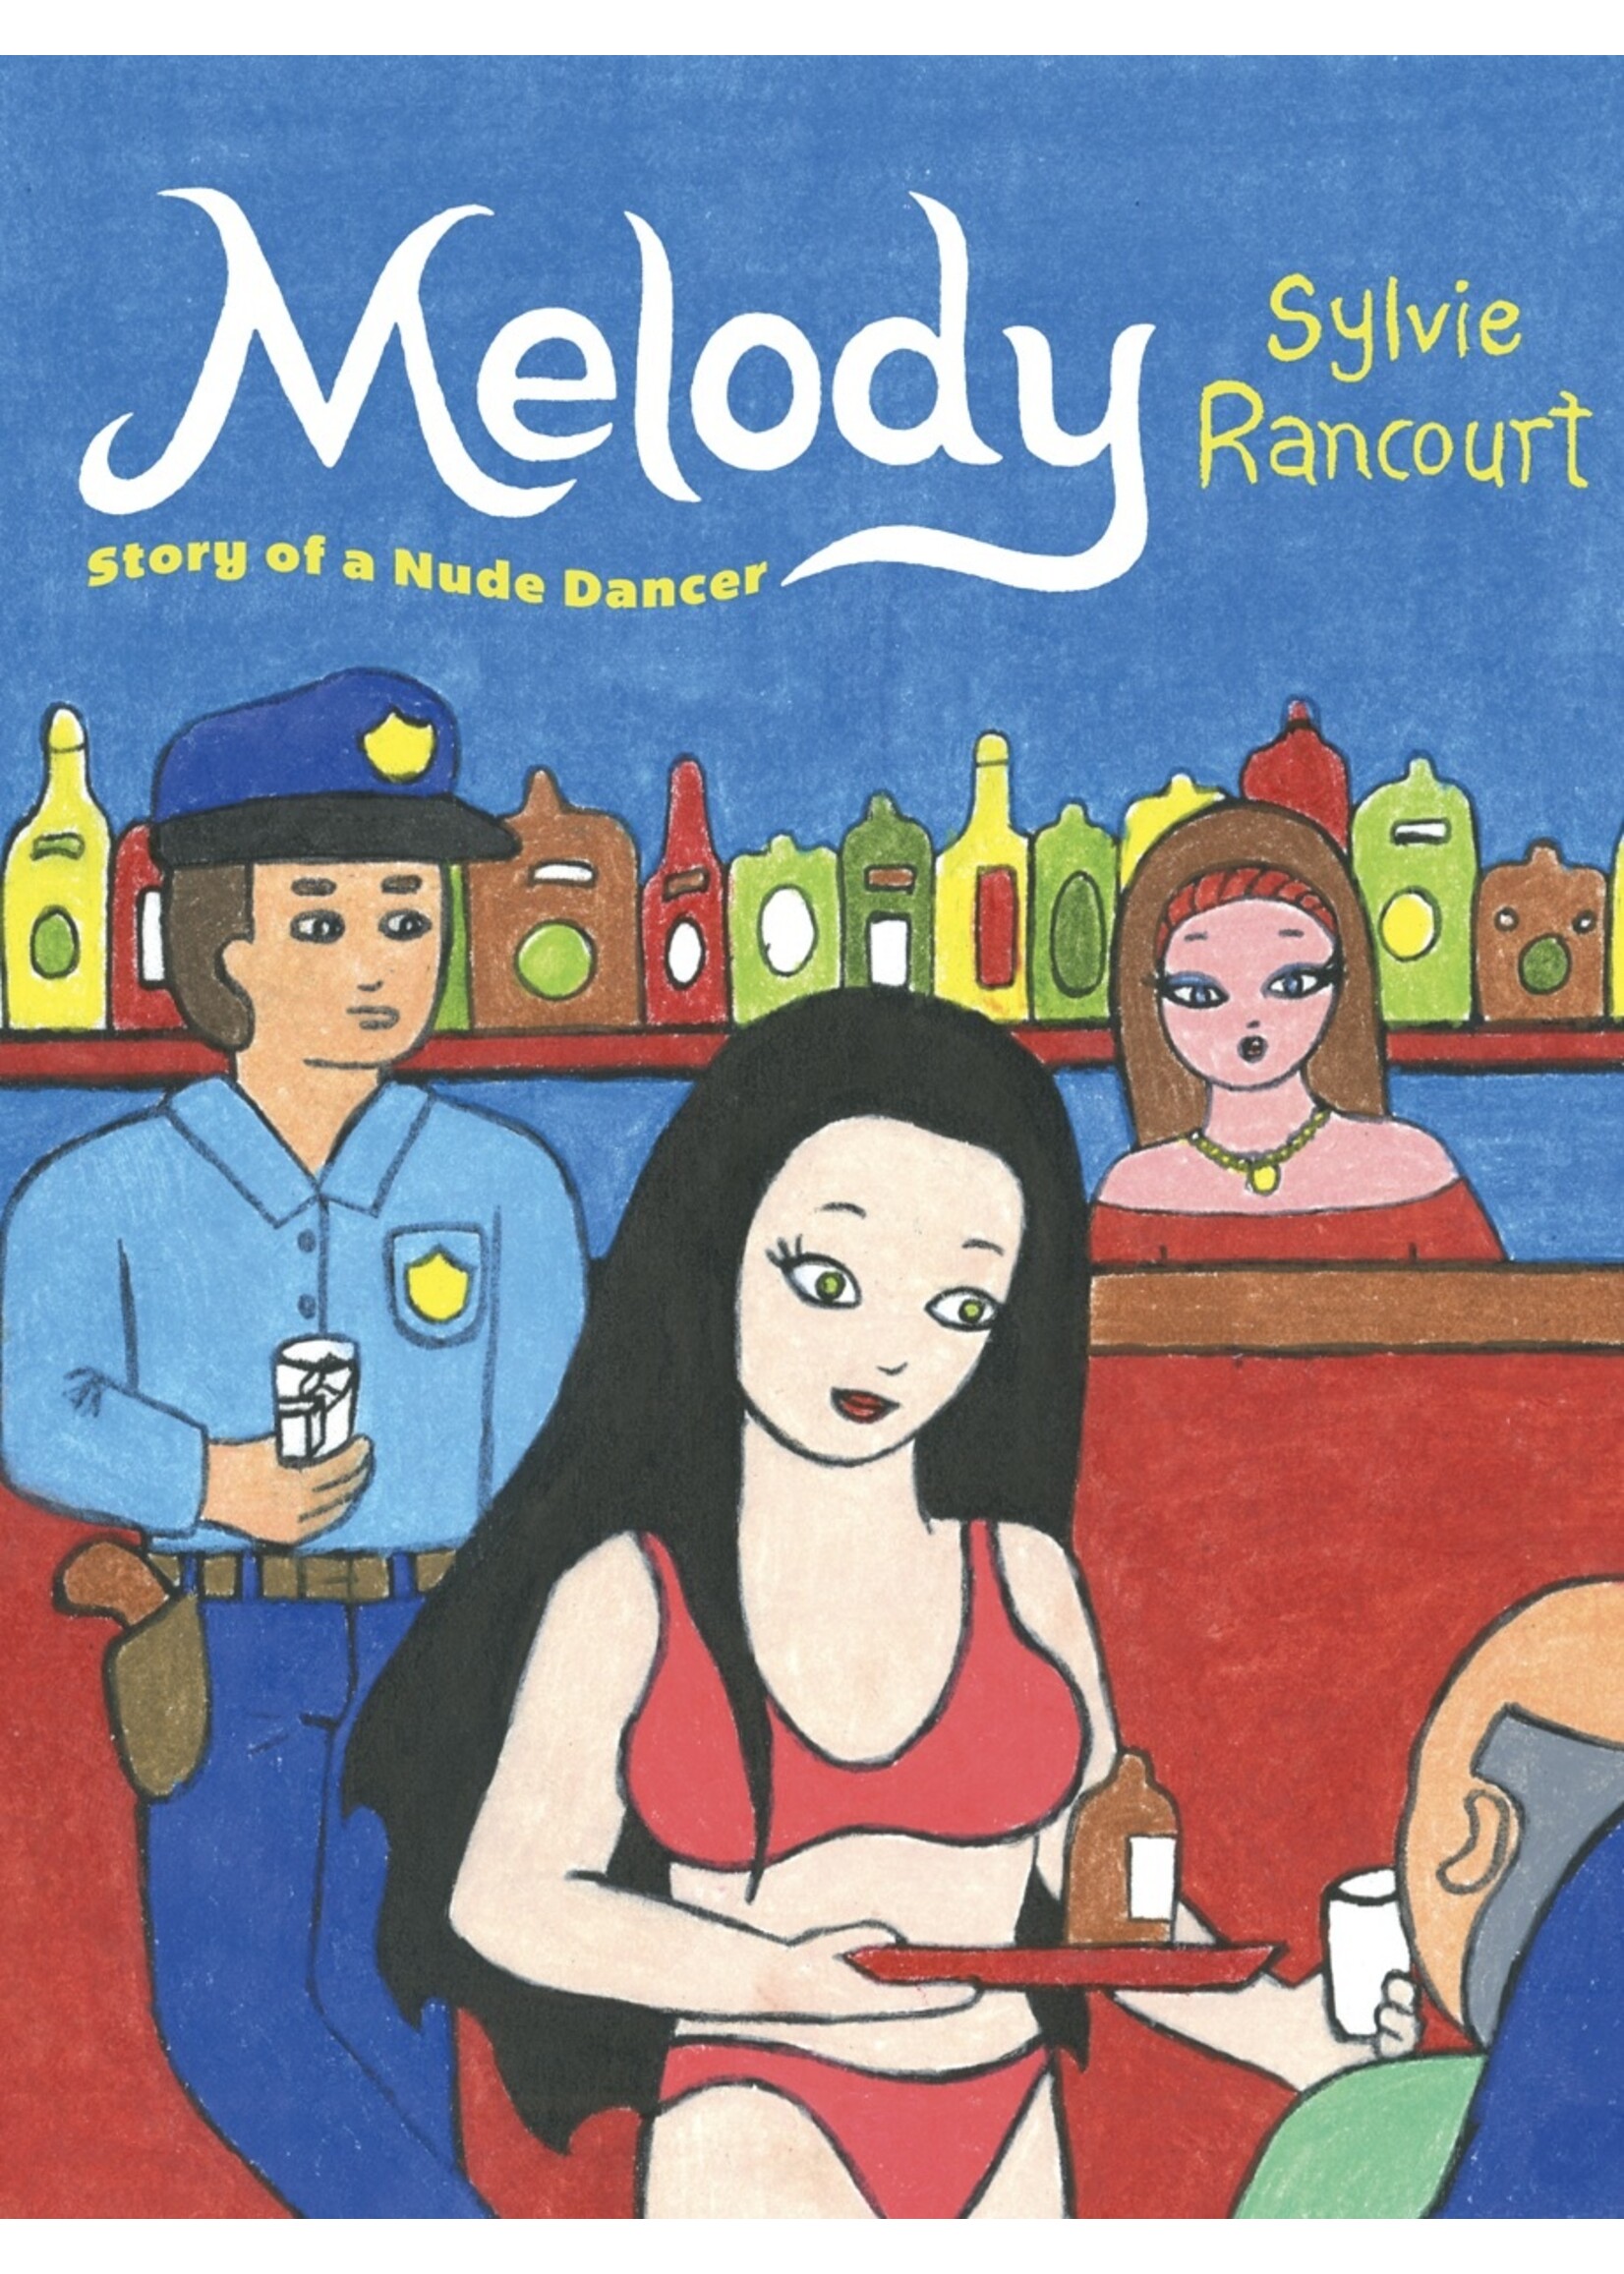 Drawn & Quarterly "Mélody: Story of a Nude Dancer" by Sylvie Rancourt